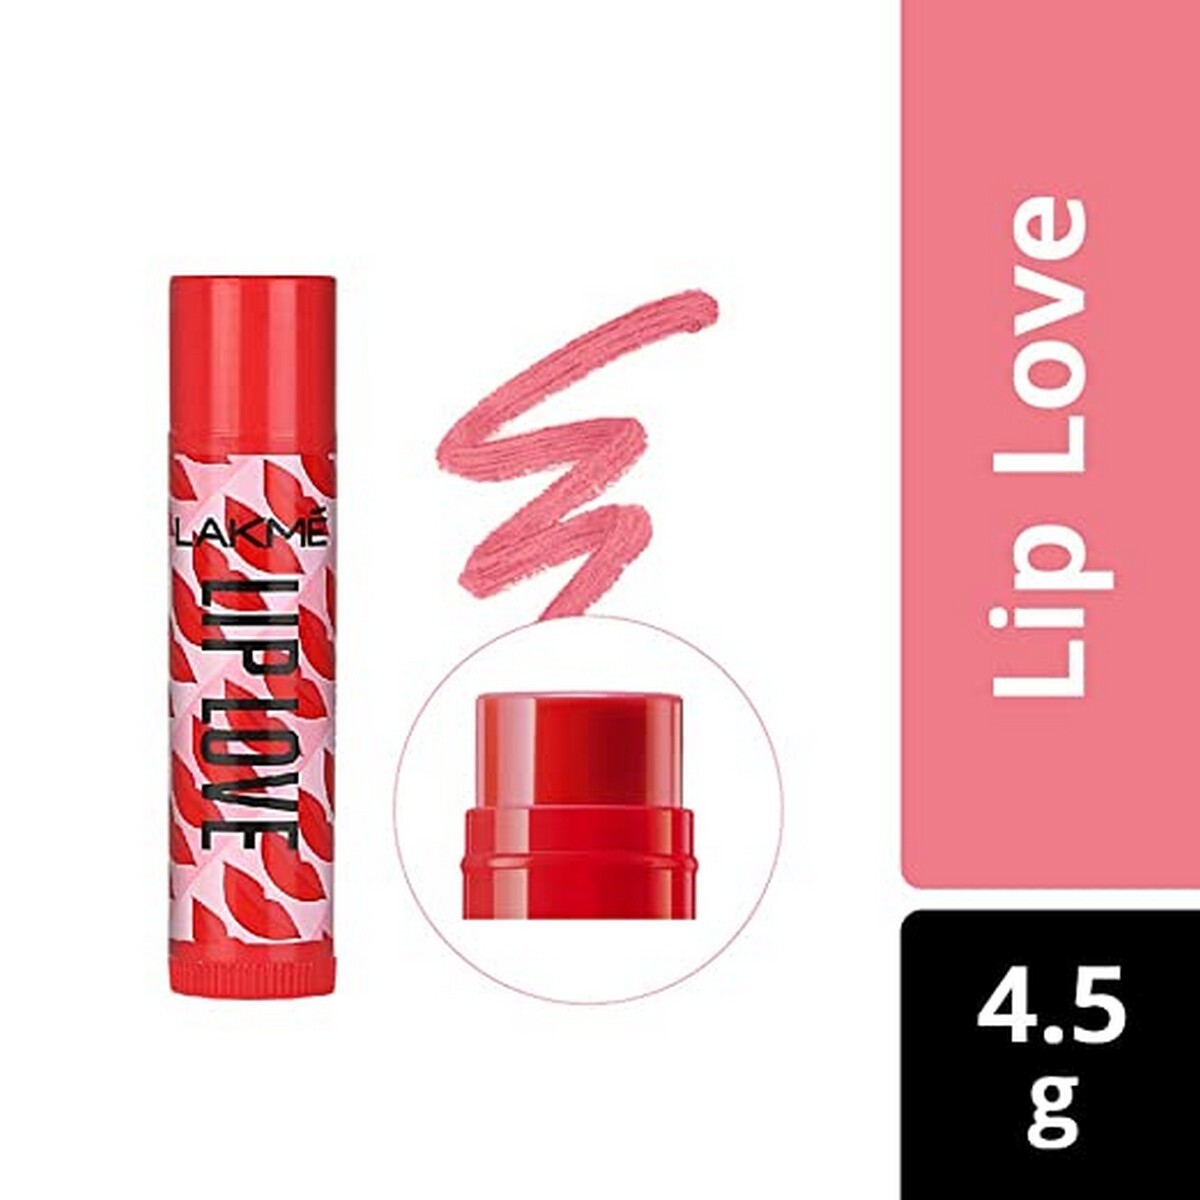 Lakme Chapstick Lip Love Chery SPF15  4.5g